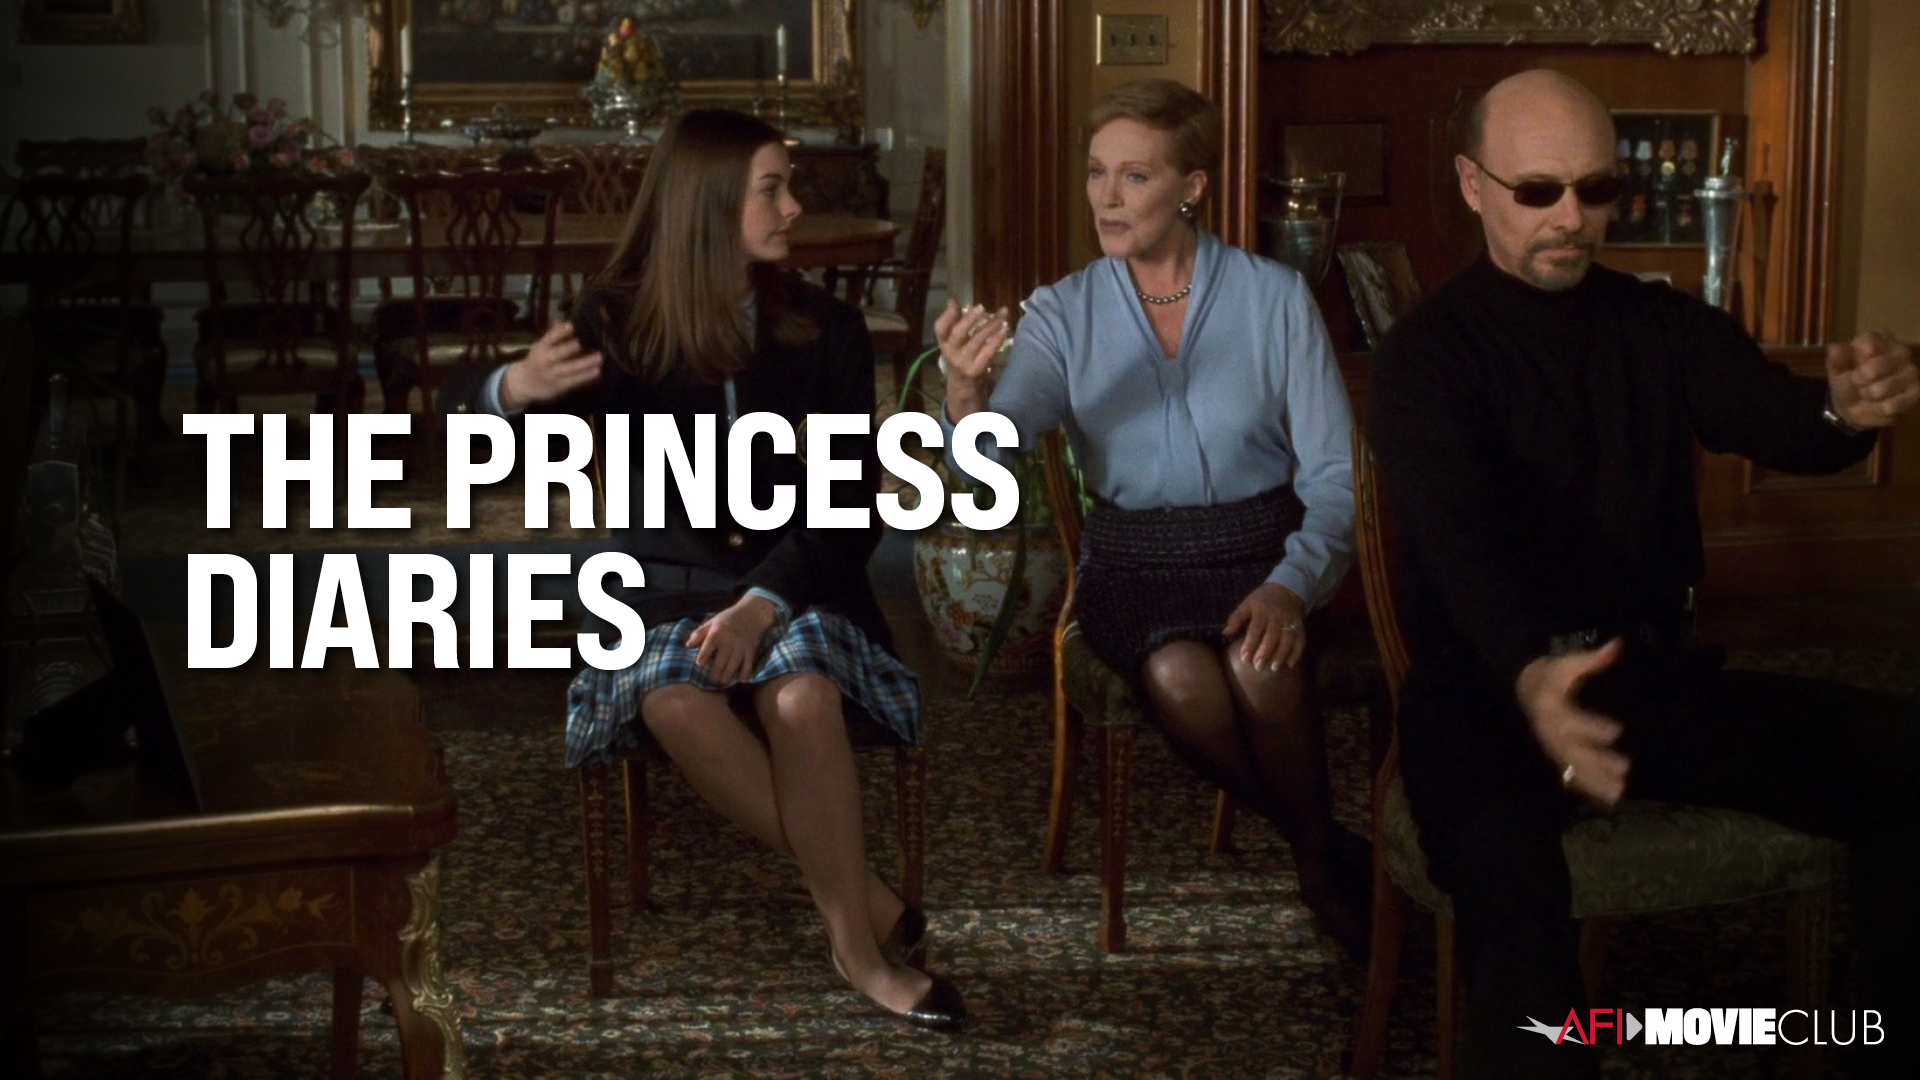 The Princess Diaries Film Still - Julie Andrews, Hector Elizondo, and Anne Hathaway